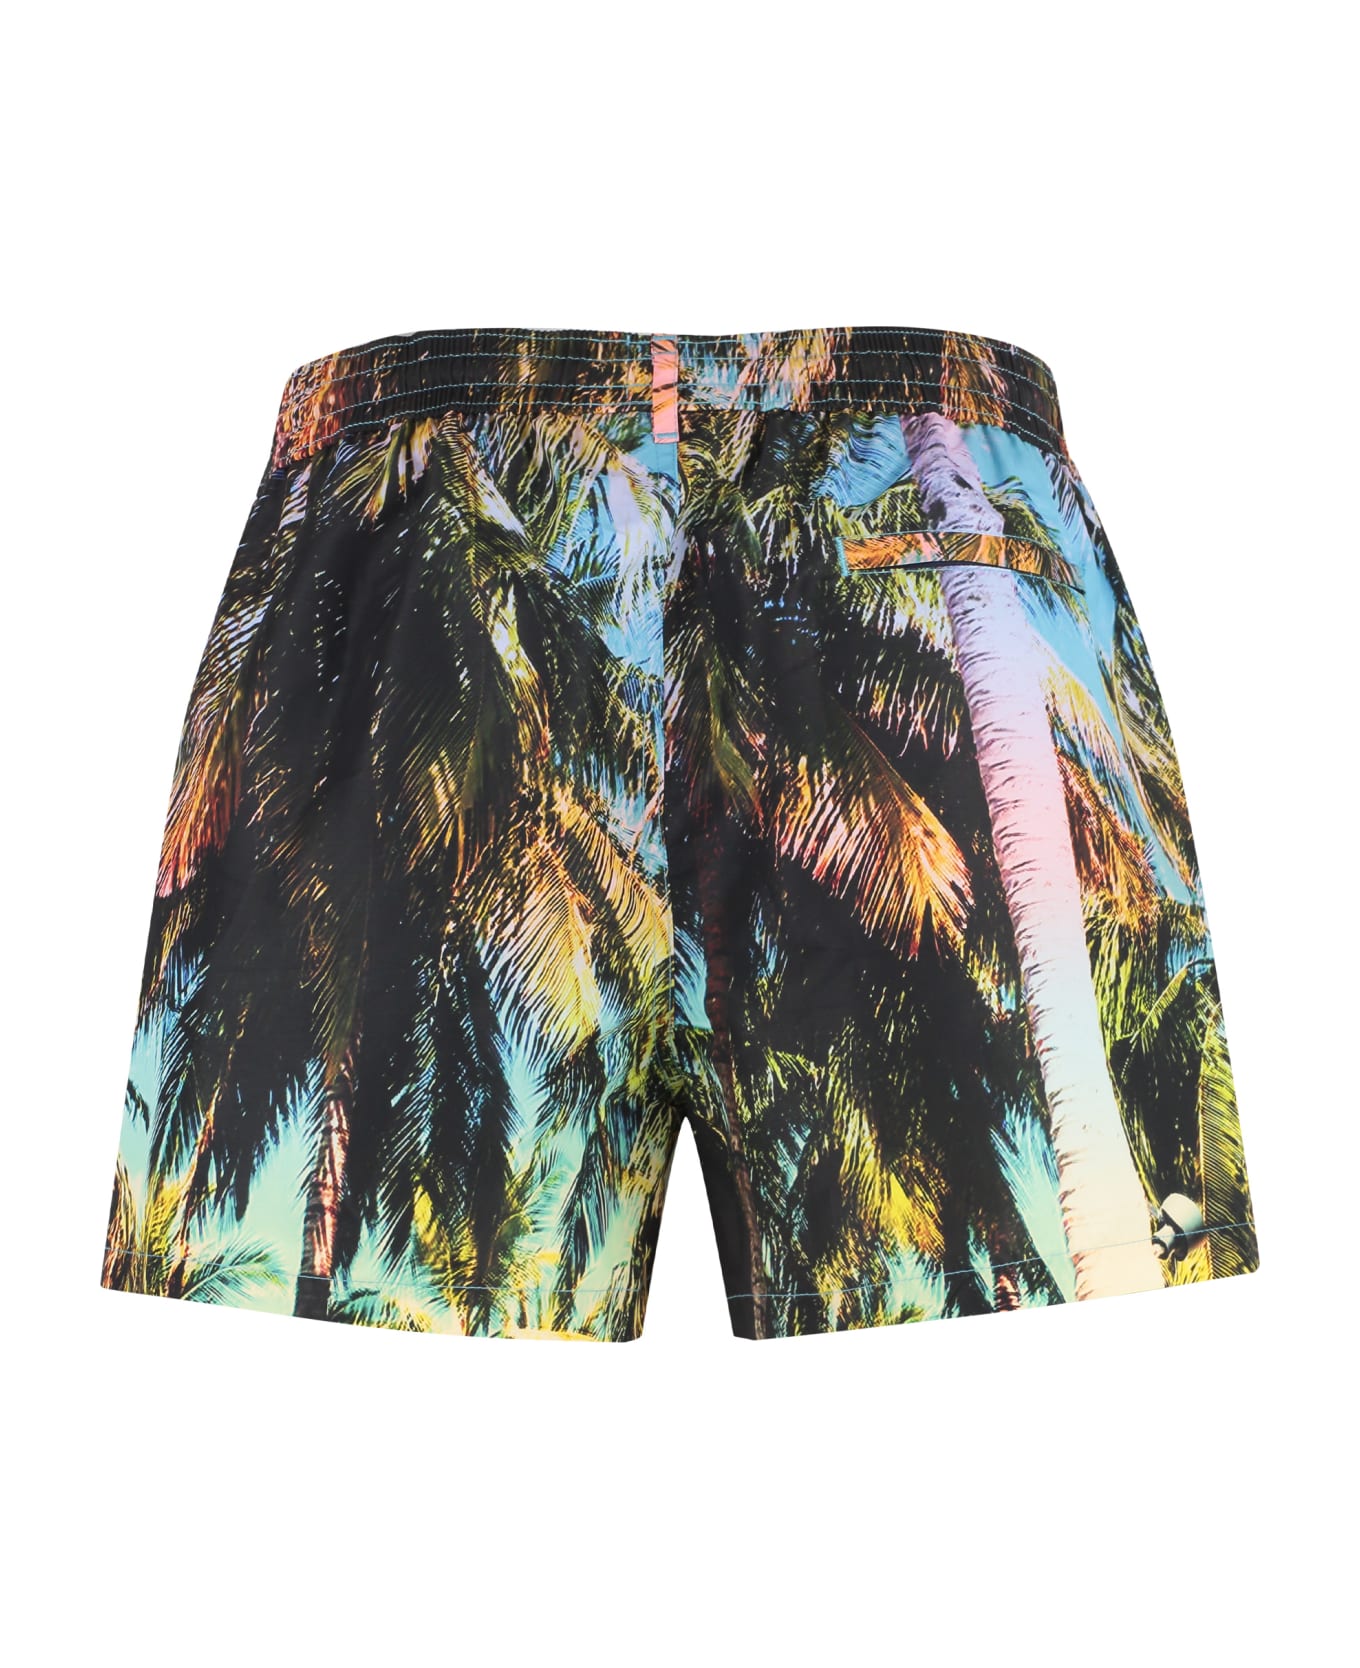 Paul Smith Printed Swim Shorts - Multicolor